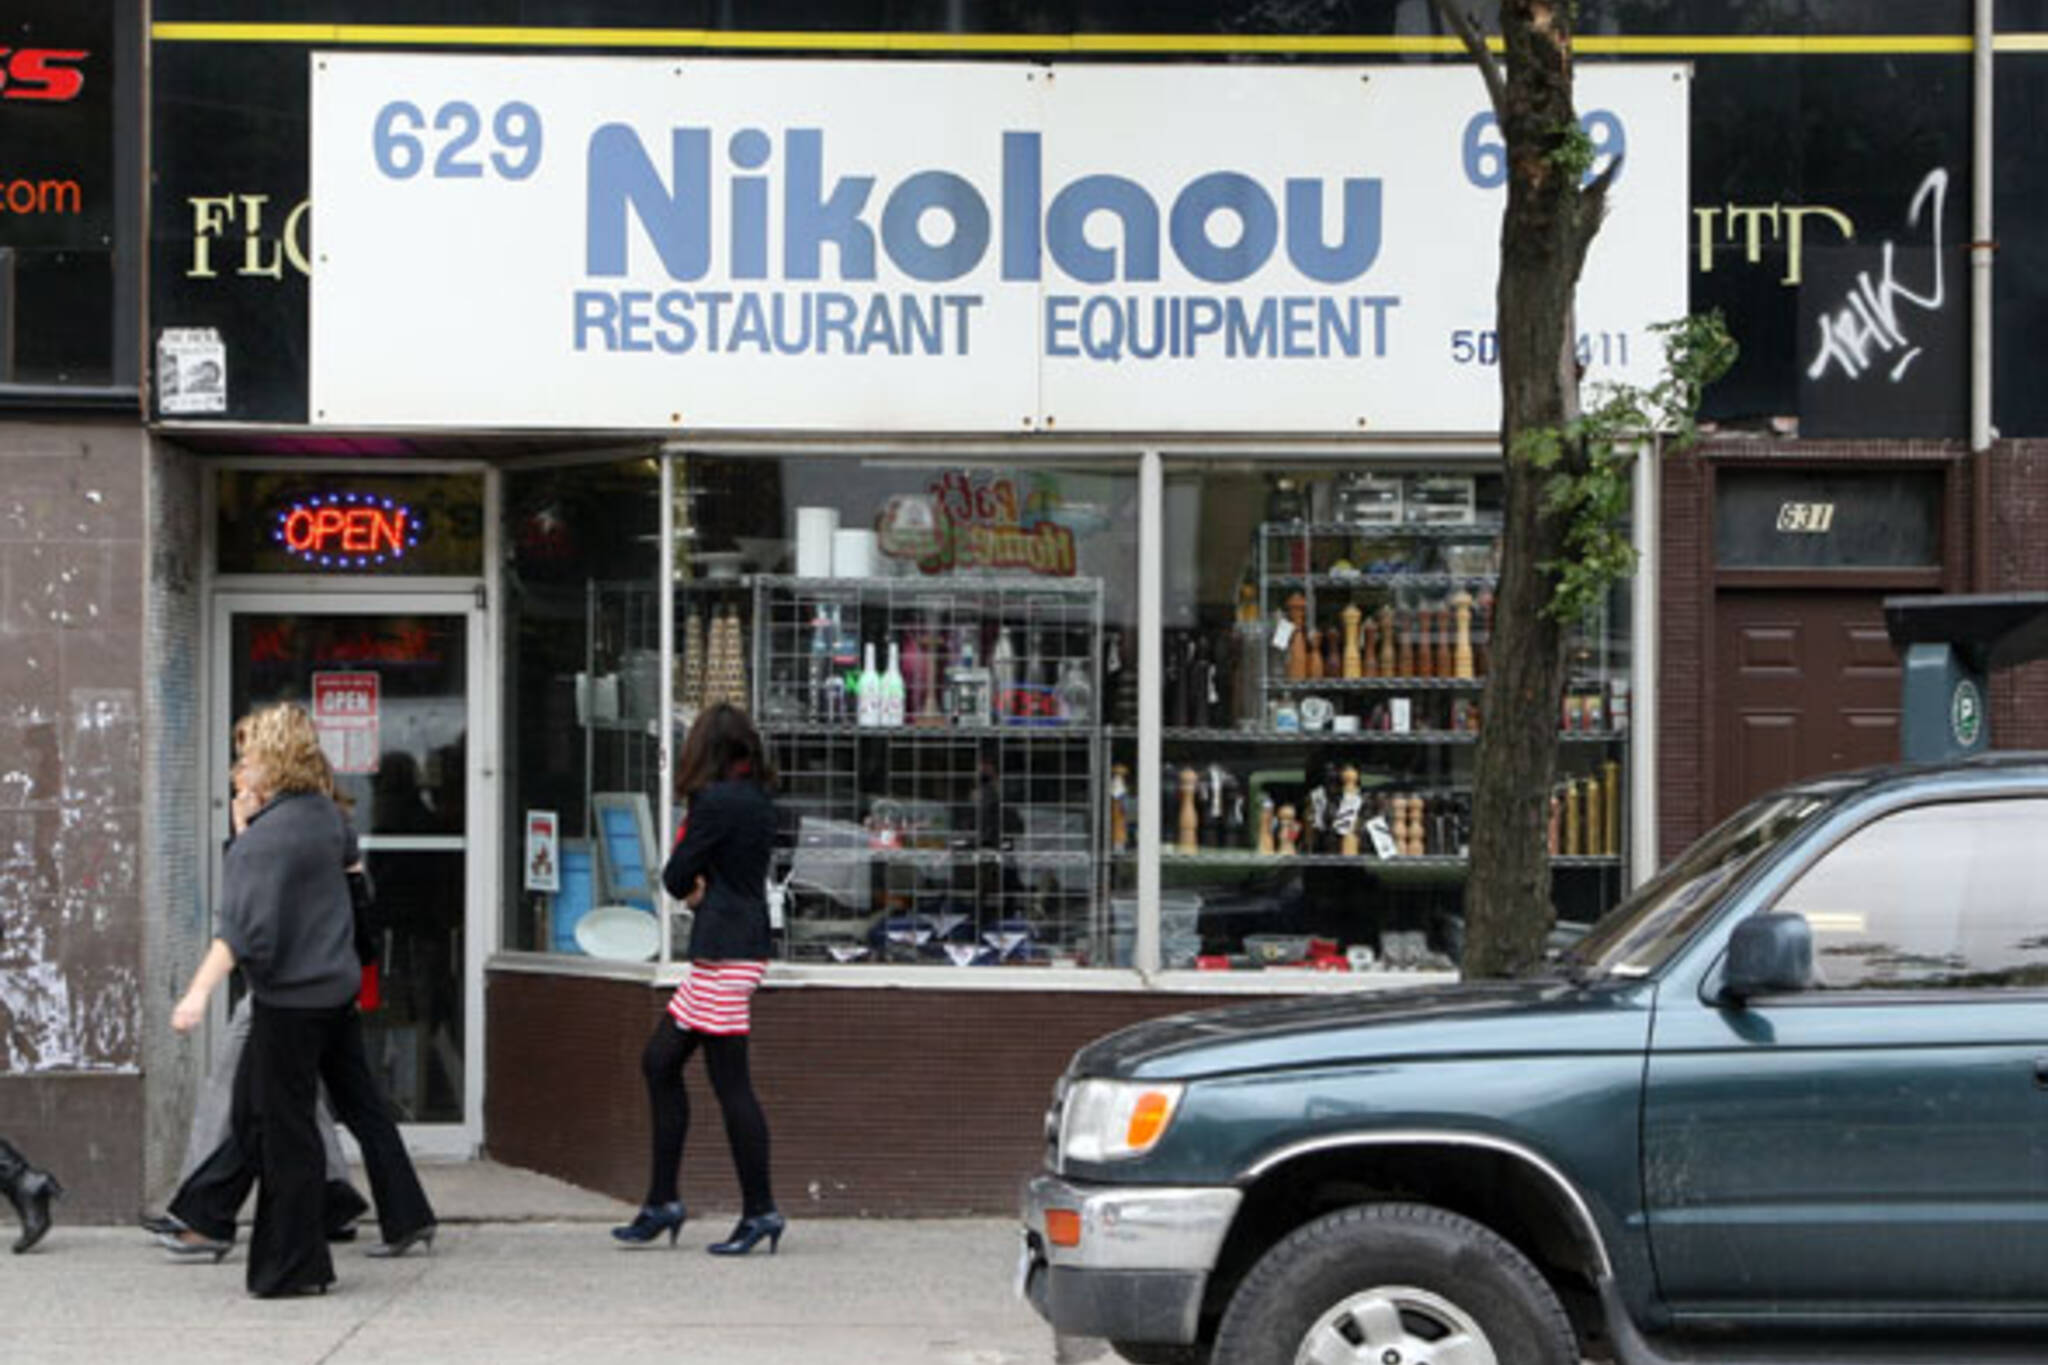 Nikolaou Restaurant Equipment